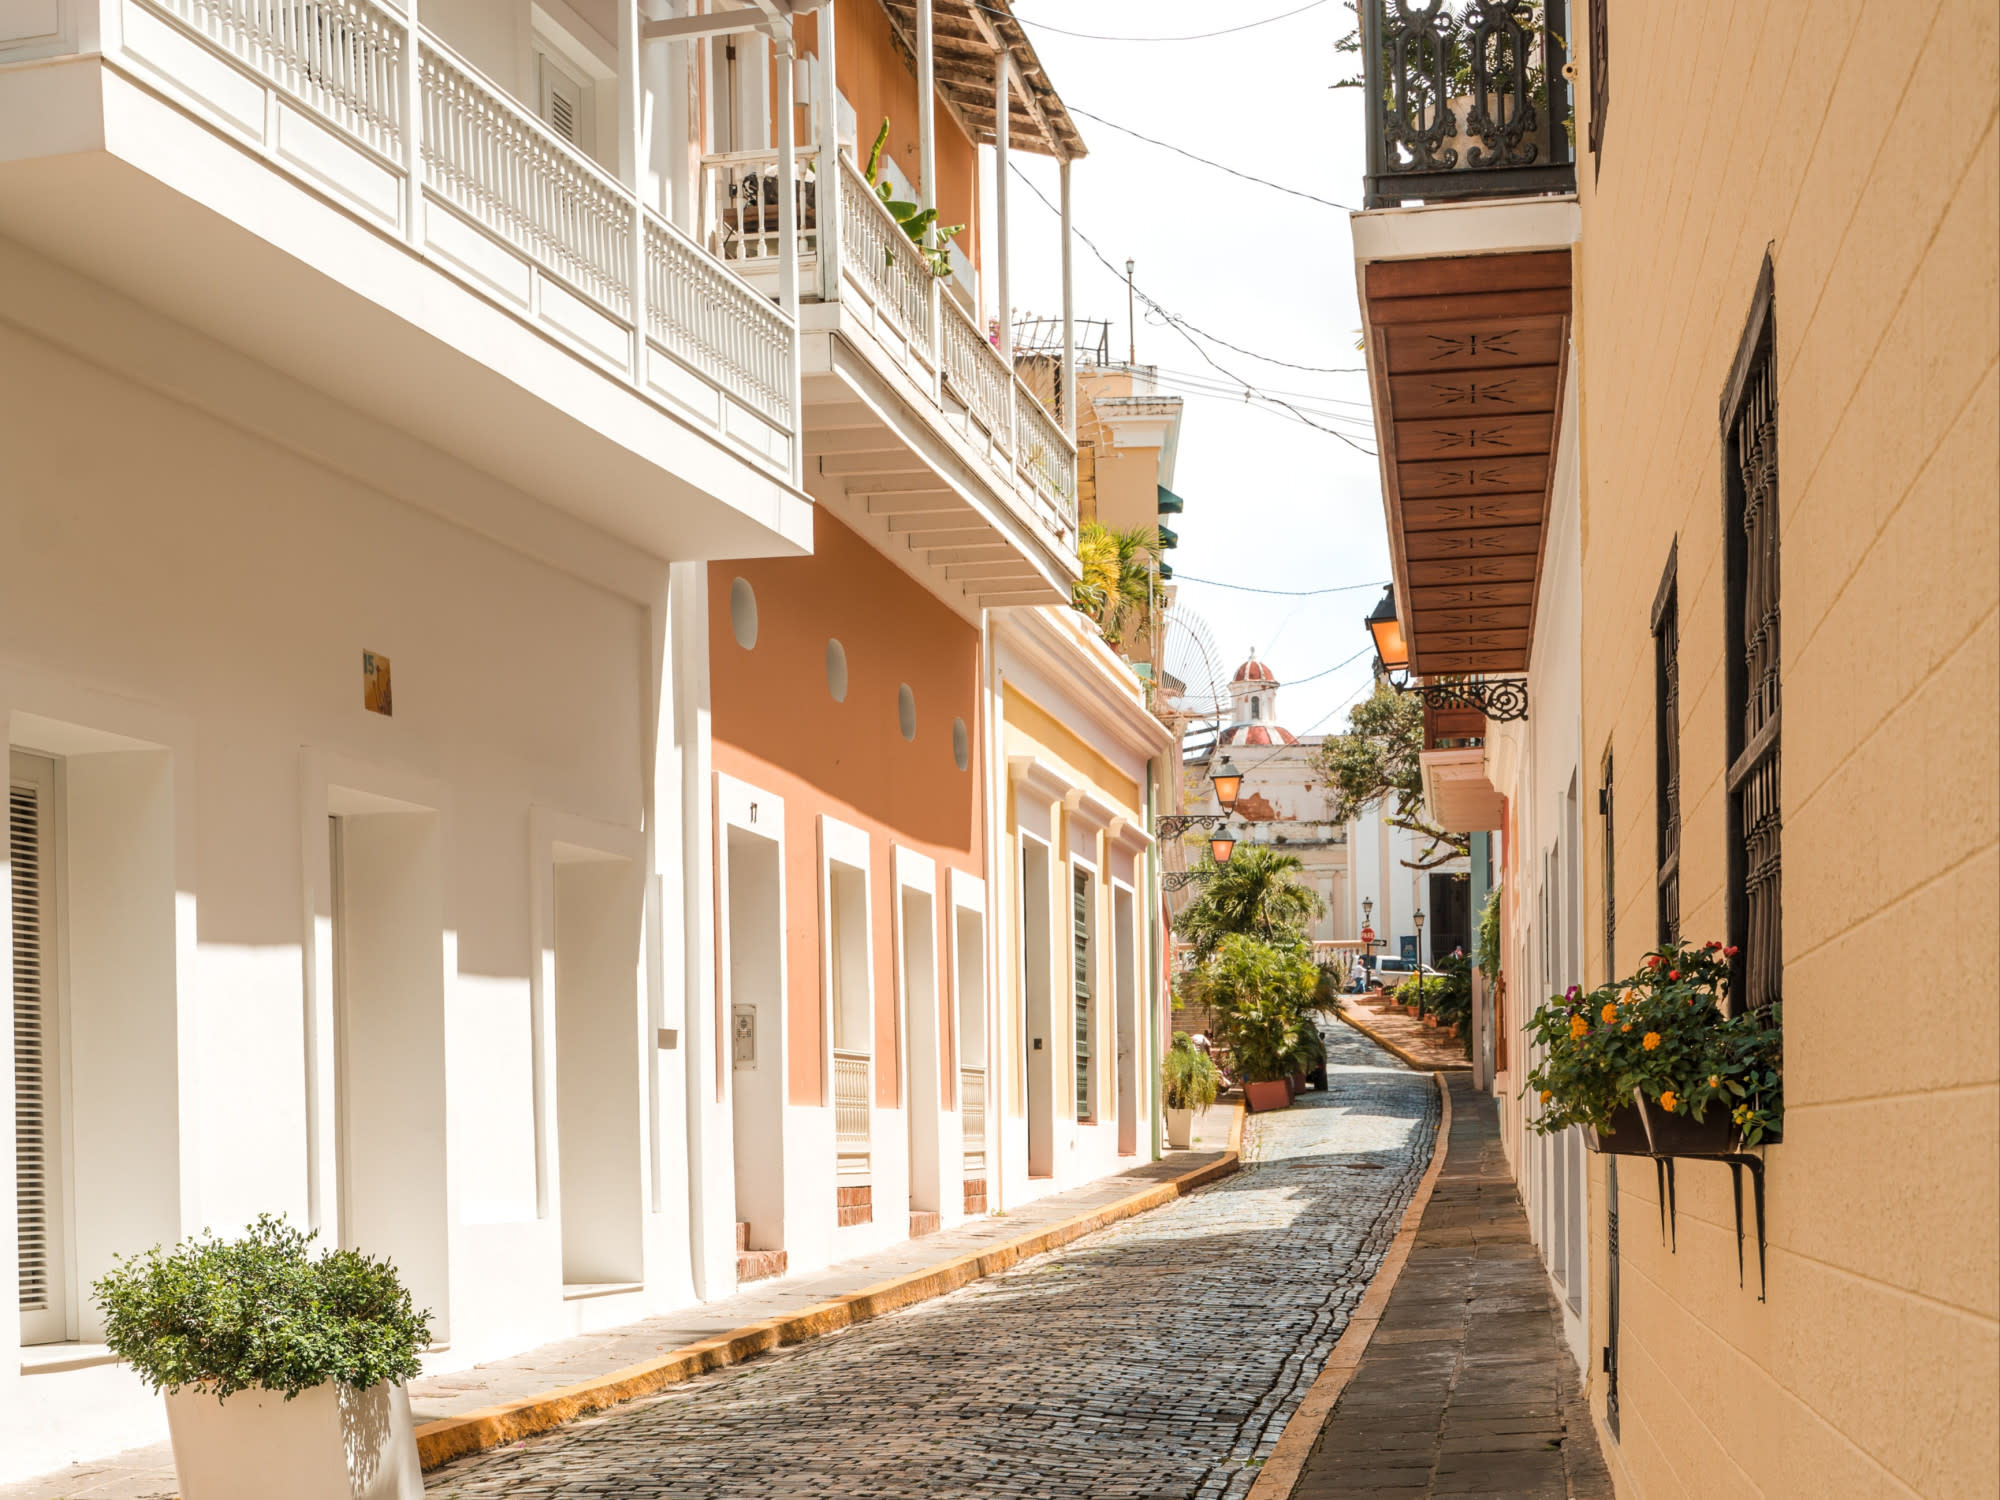 Old San Juan, Puerto Rico's Cobblestone Streets